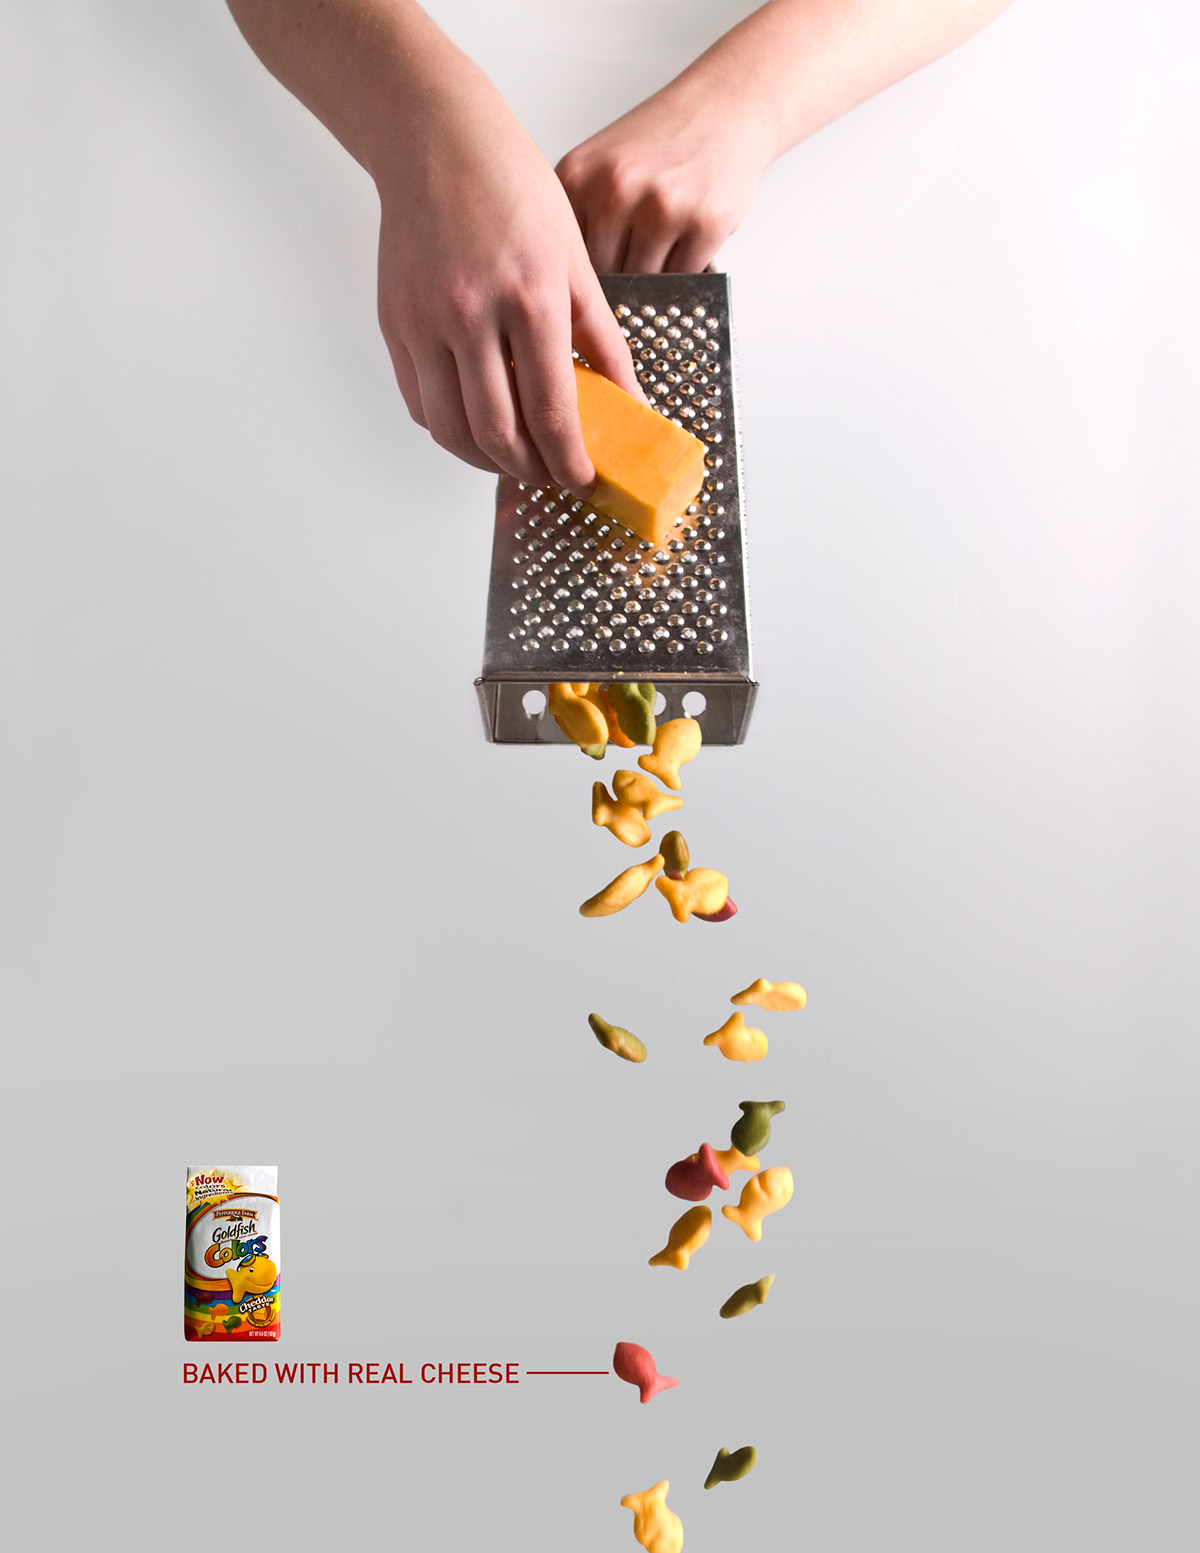 goldfish Product Photography Magazine Advertisemnet snacks Food  advertisement UW-Stout minneapolis Health